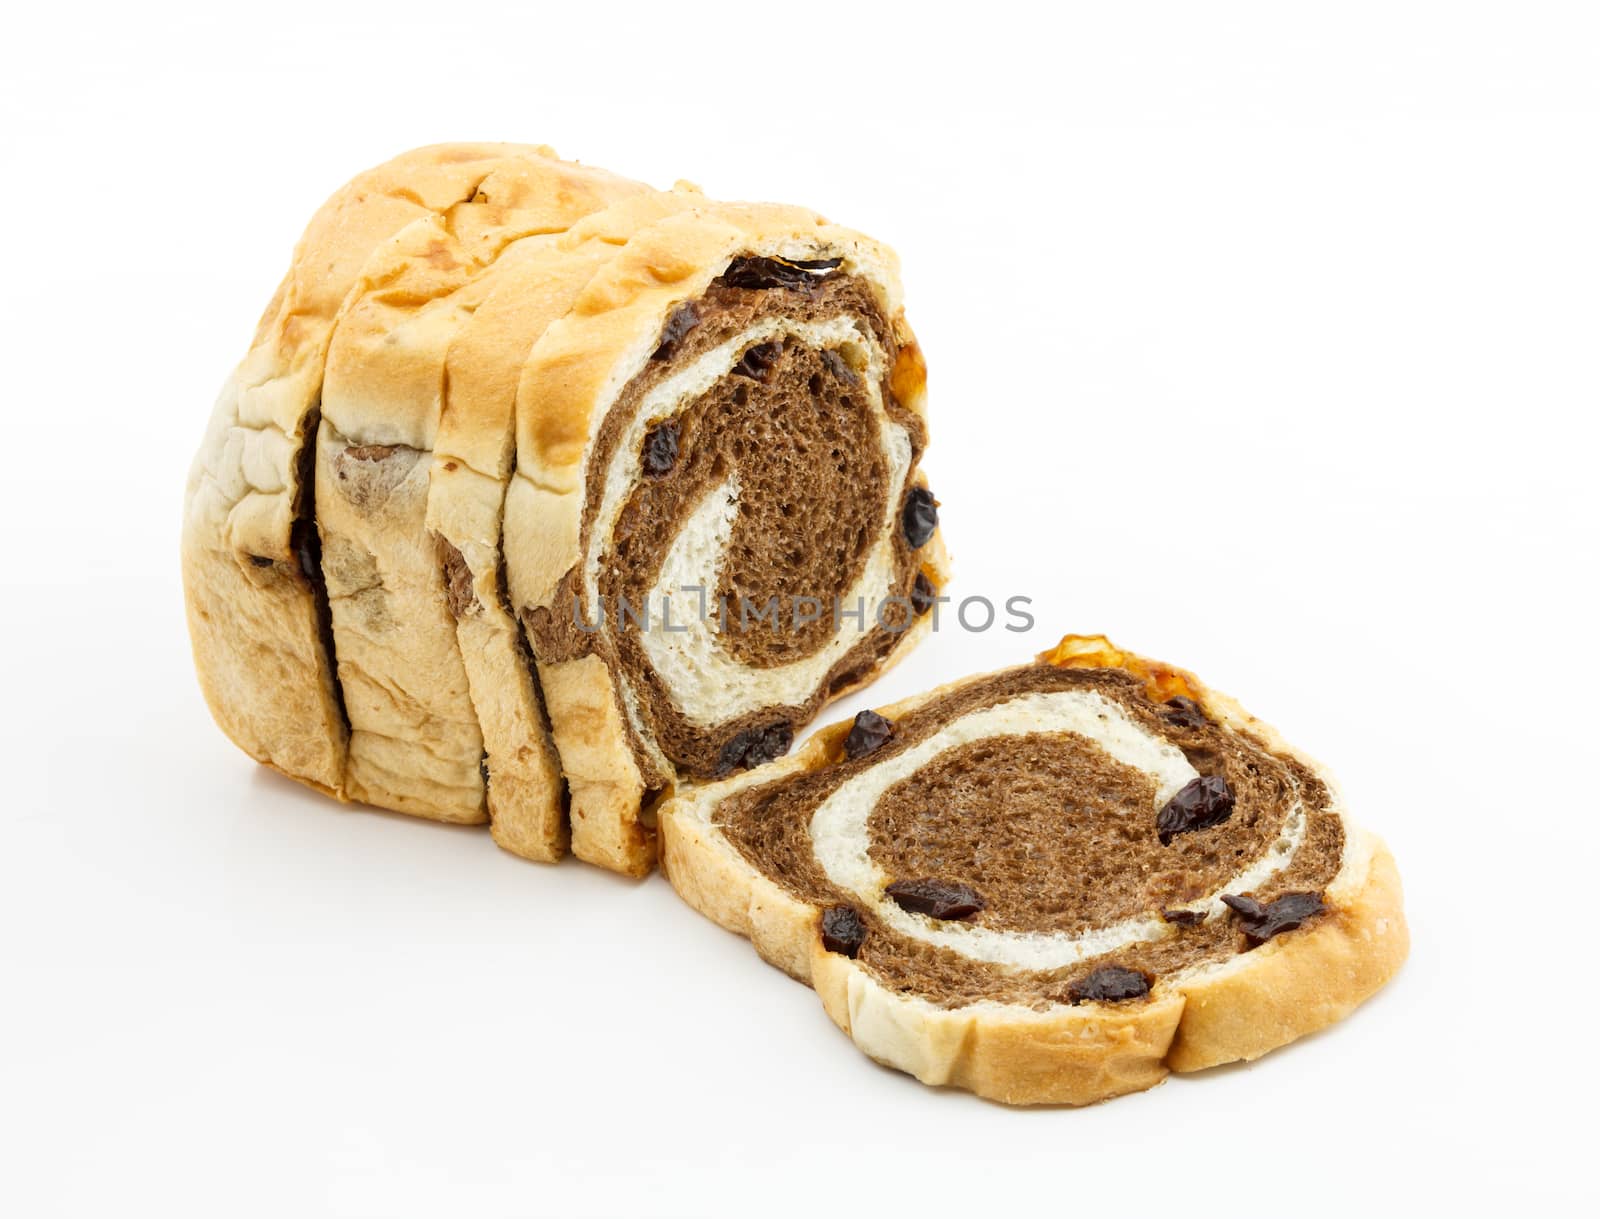 Loaf of sliced raisin bread on white background